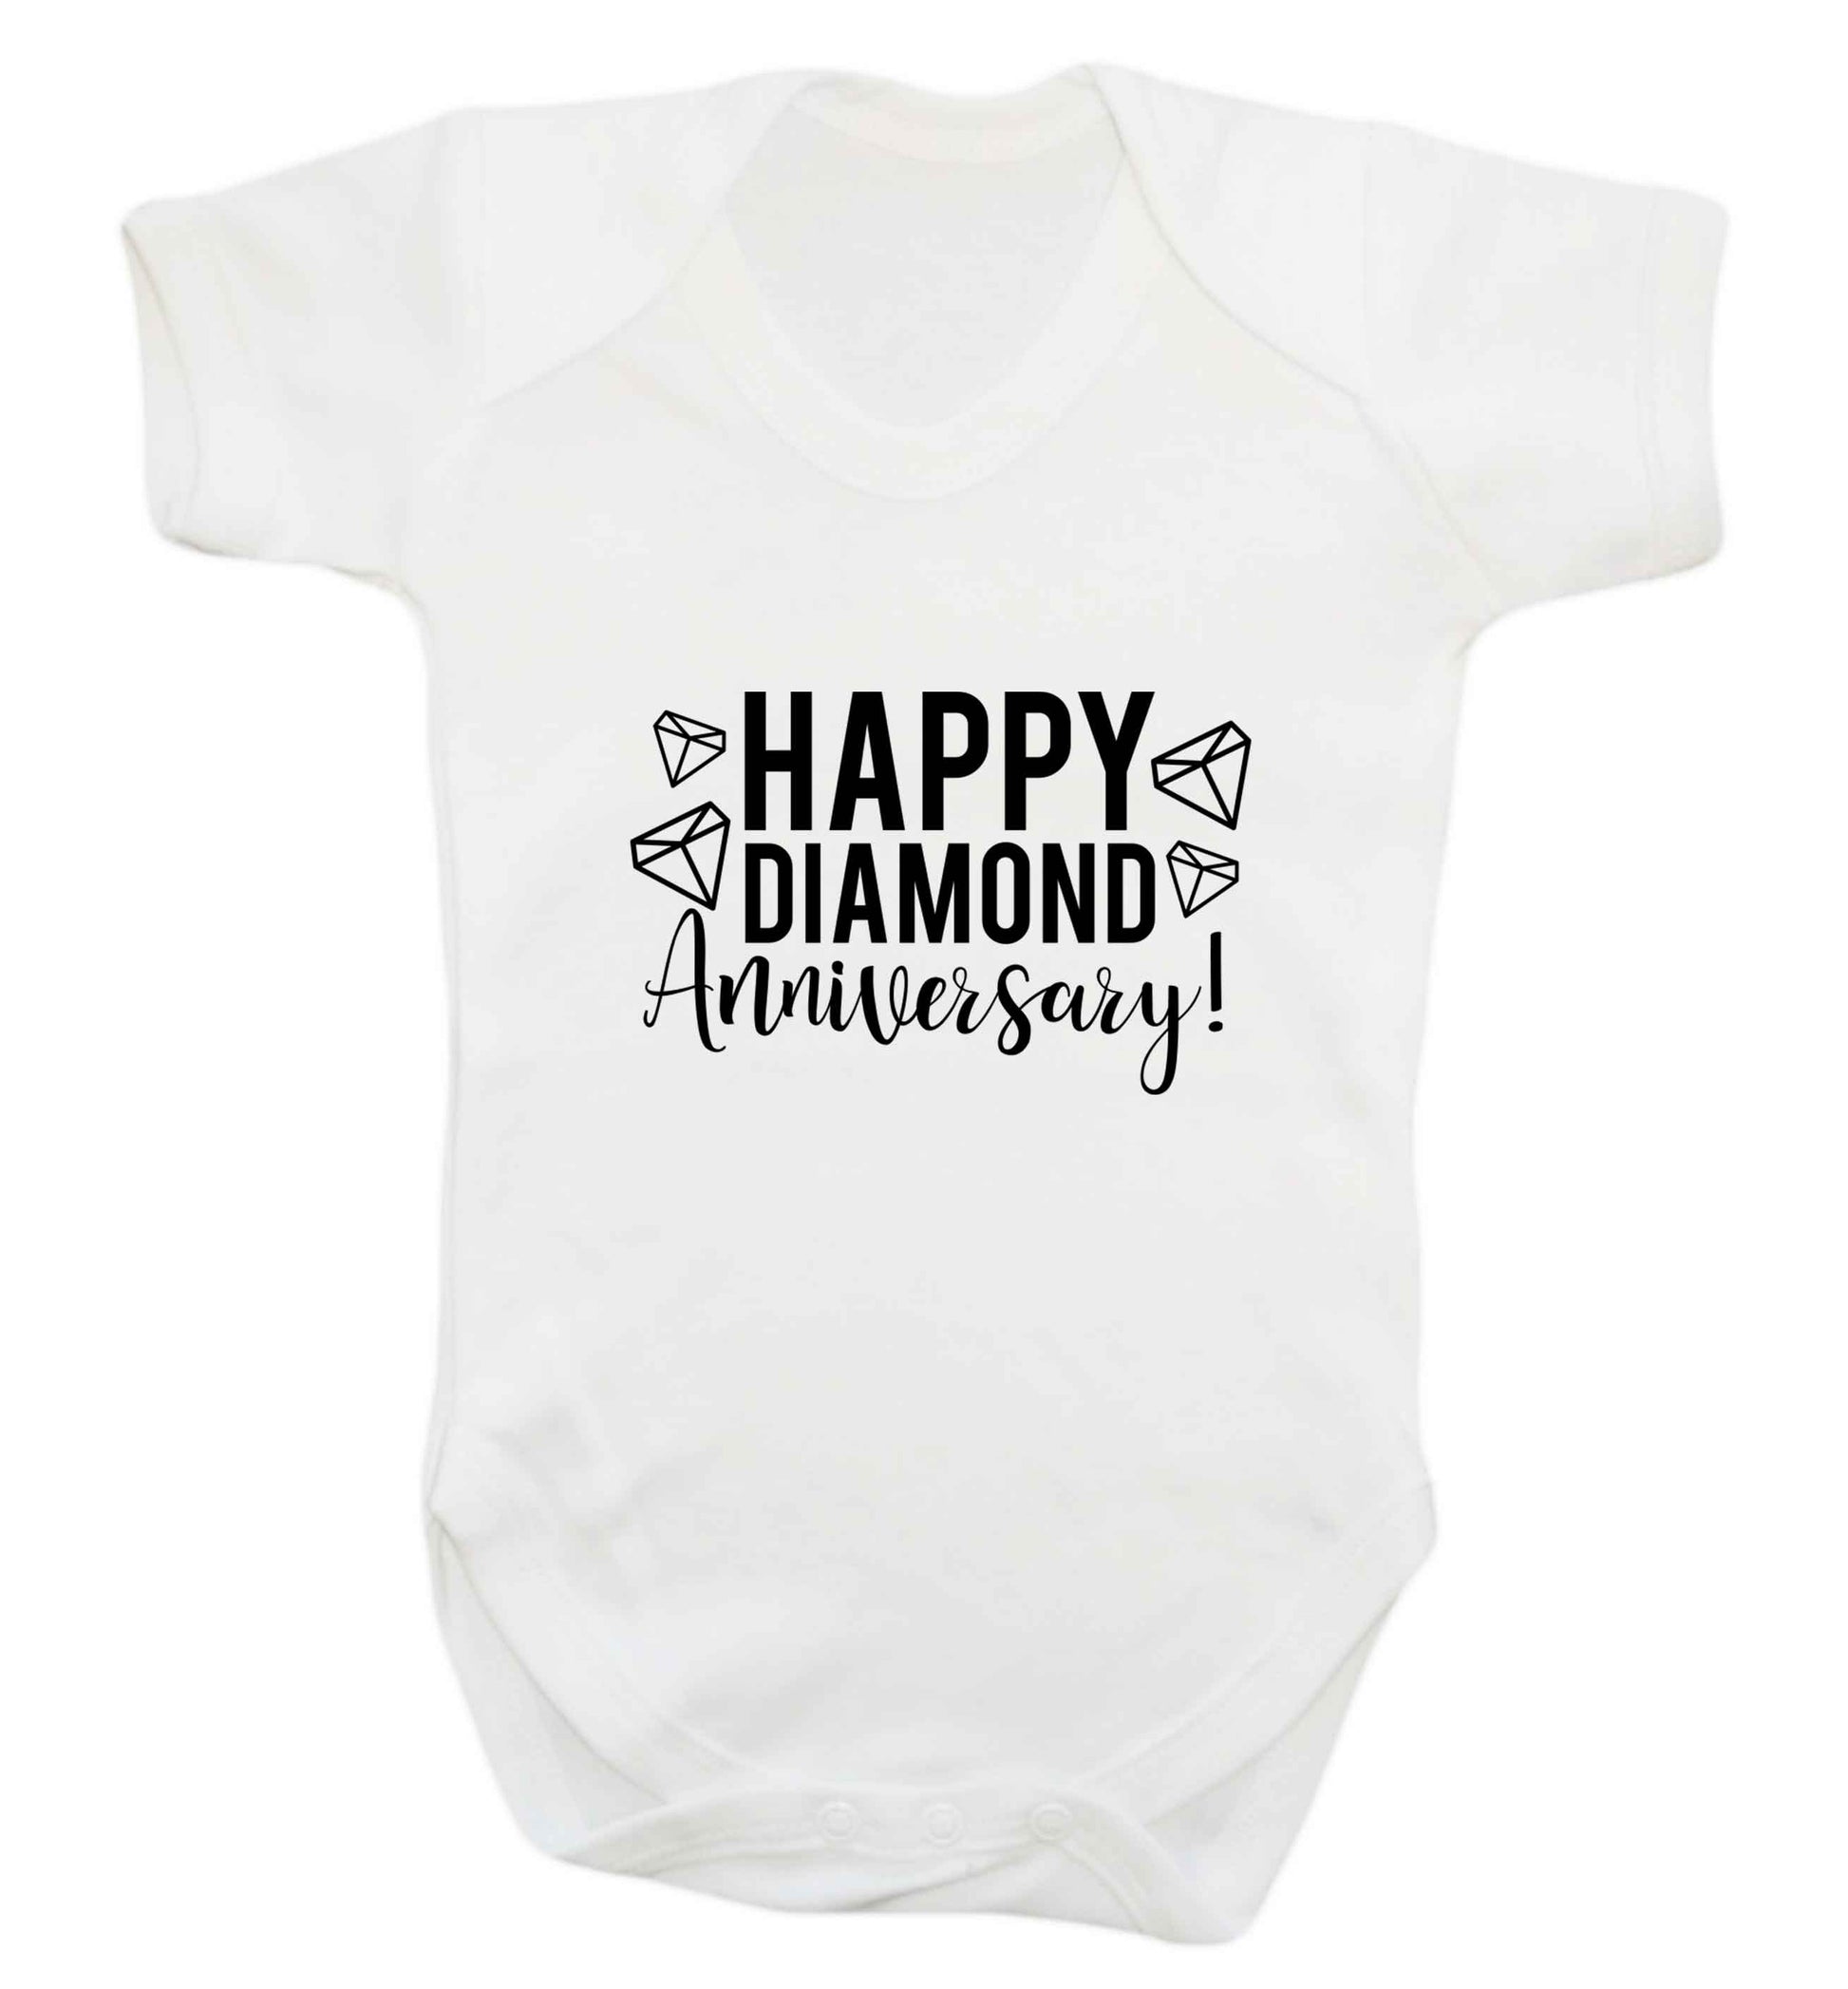 Happy diamond anniversary! baby vest white 18-24 months